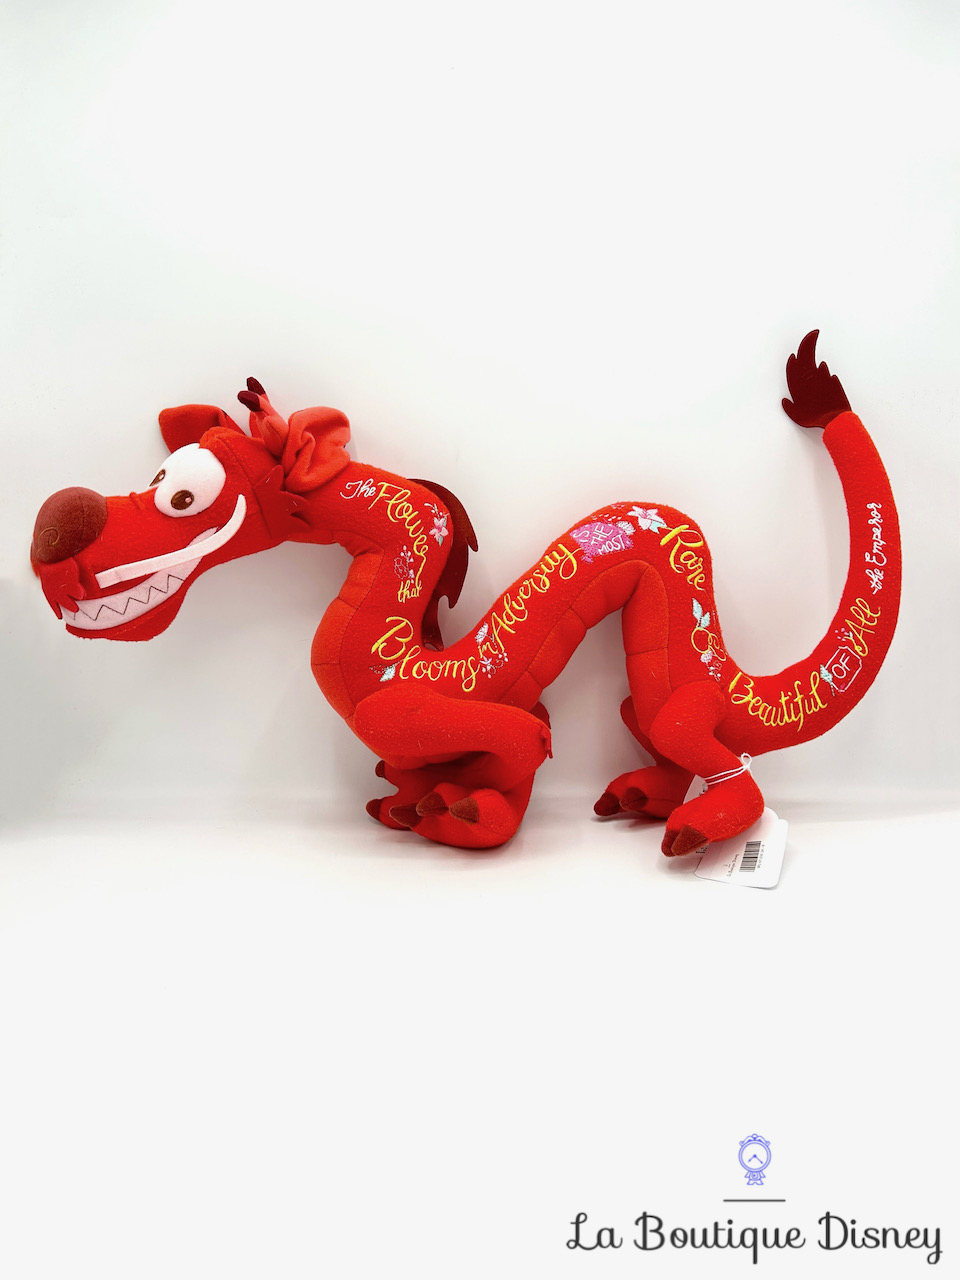 Peluche Mushu Disney Wisdom Series 2 of 12 Édition limitée Disney Store 2019 Mulan dragon rouge 48 cm